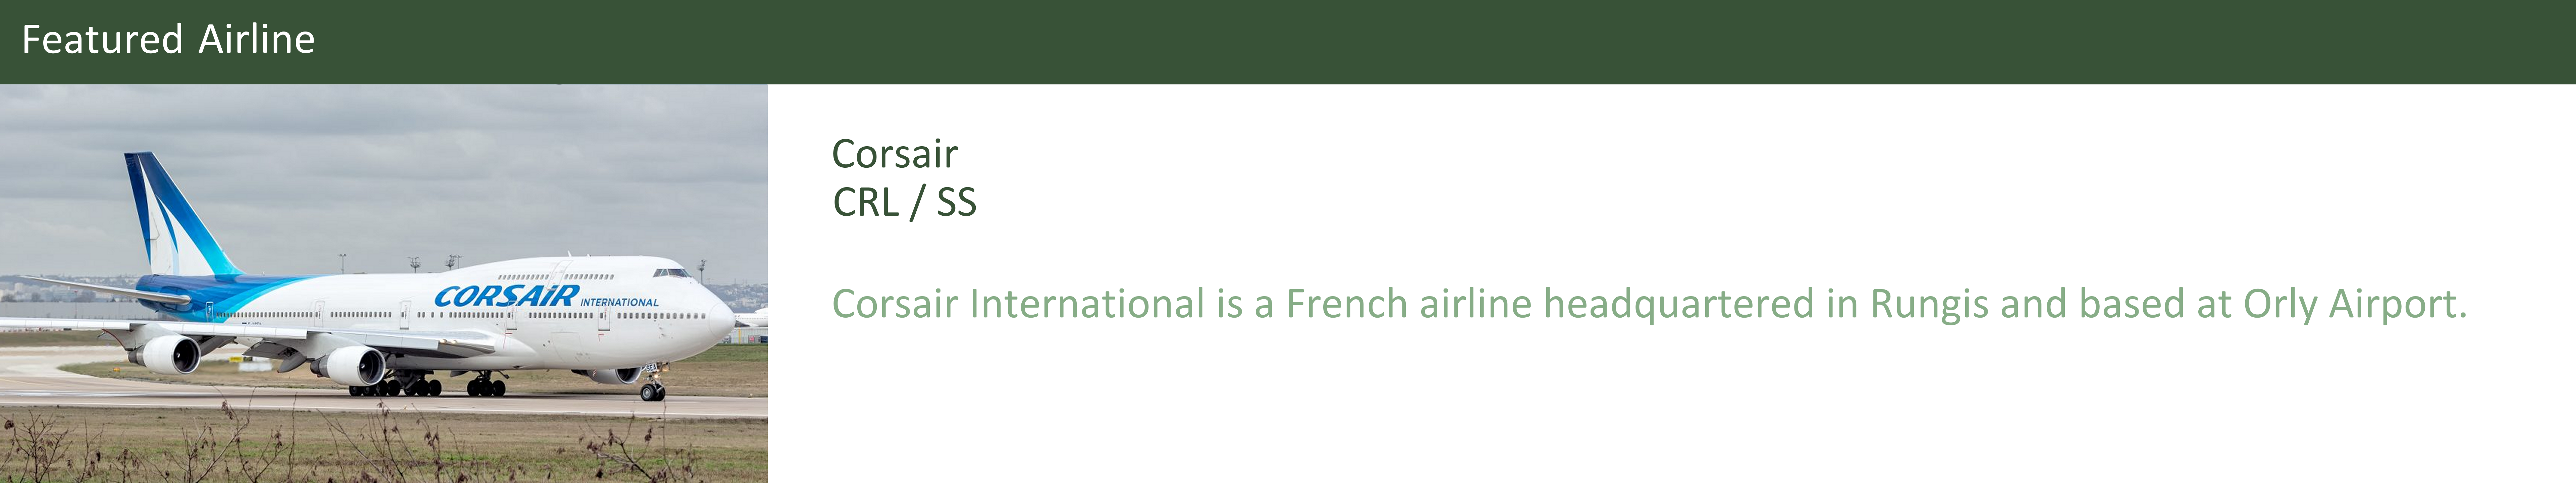 Featured Airline - Corsair International